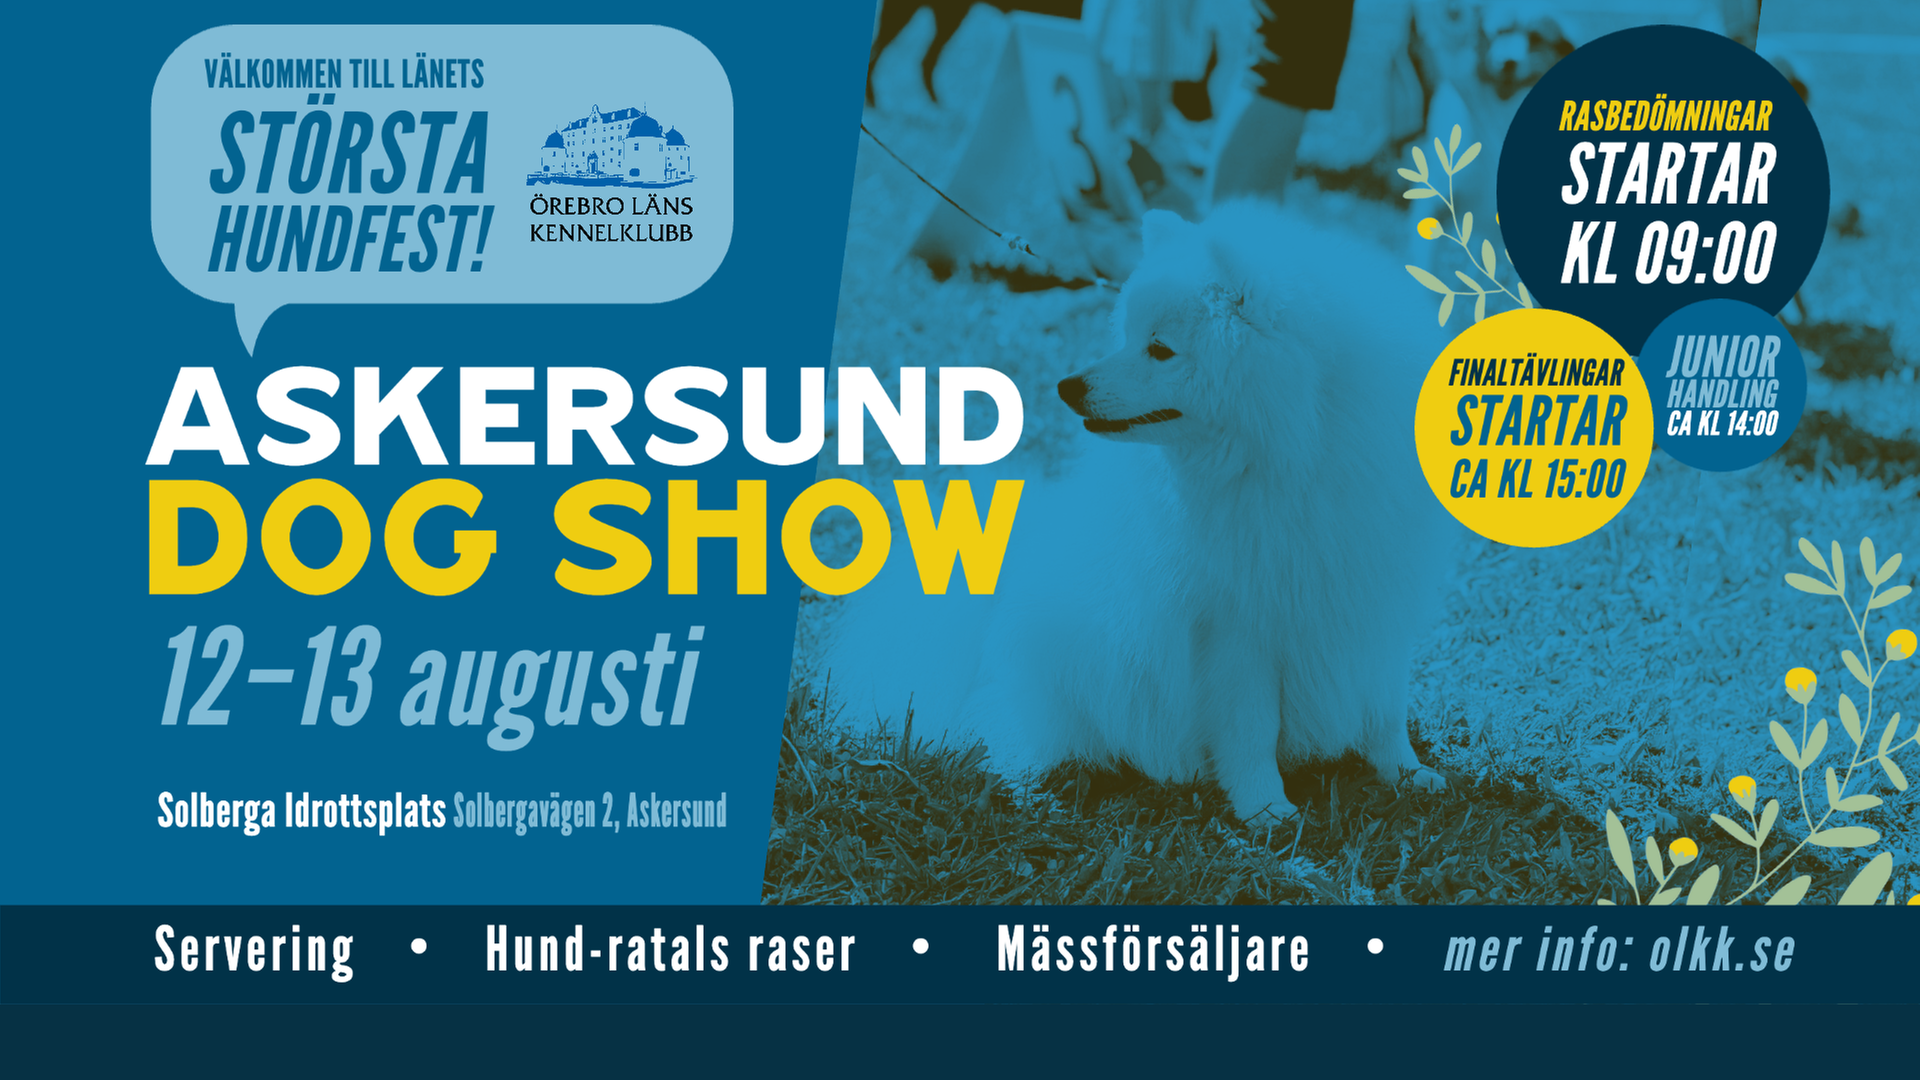 Affisch för "Askersund Dog Show".